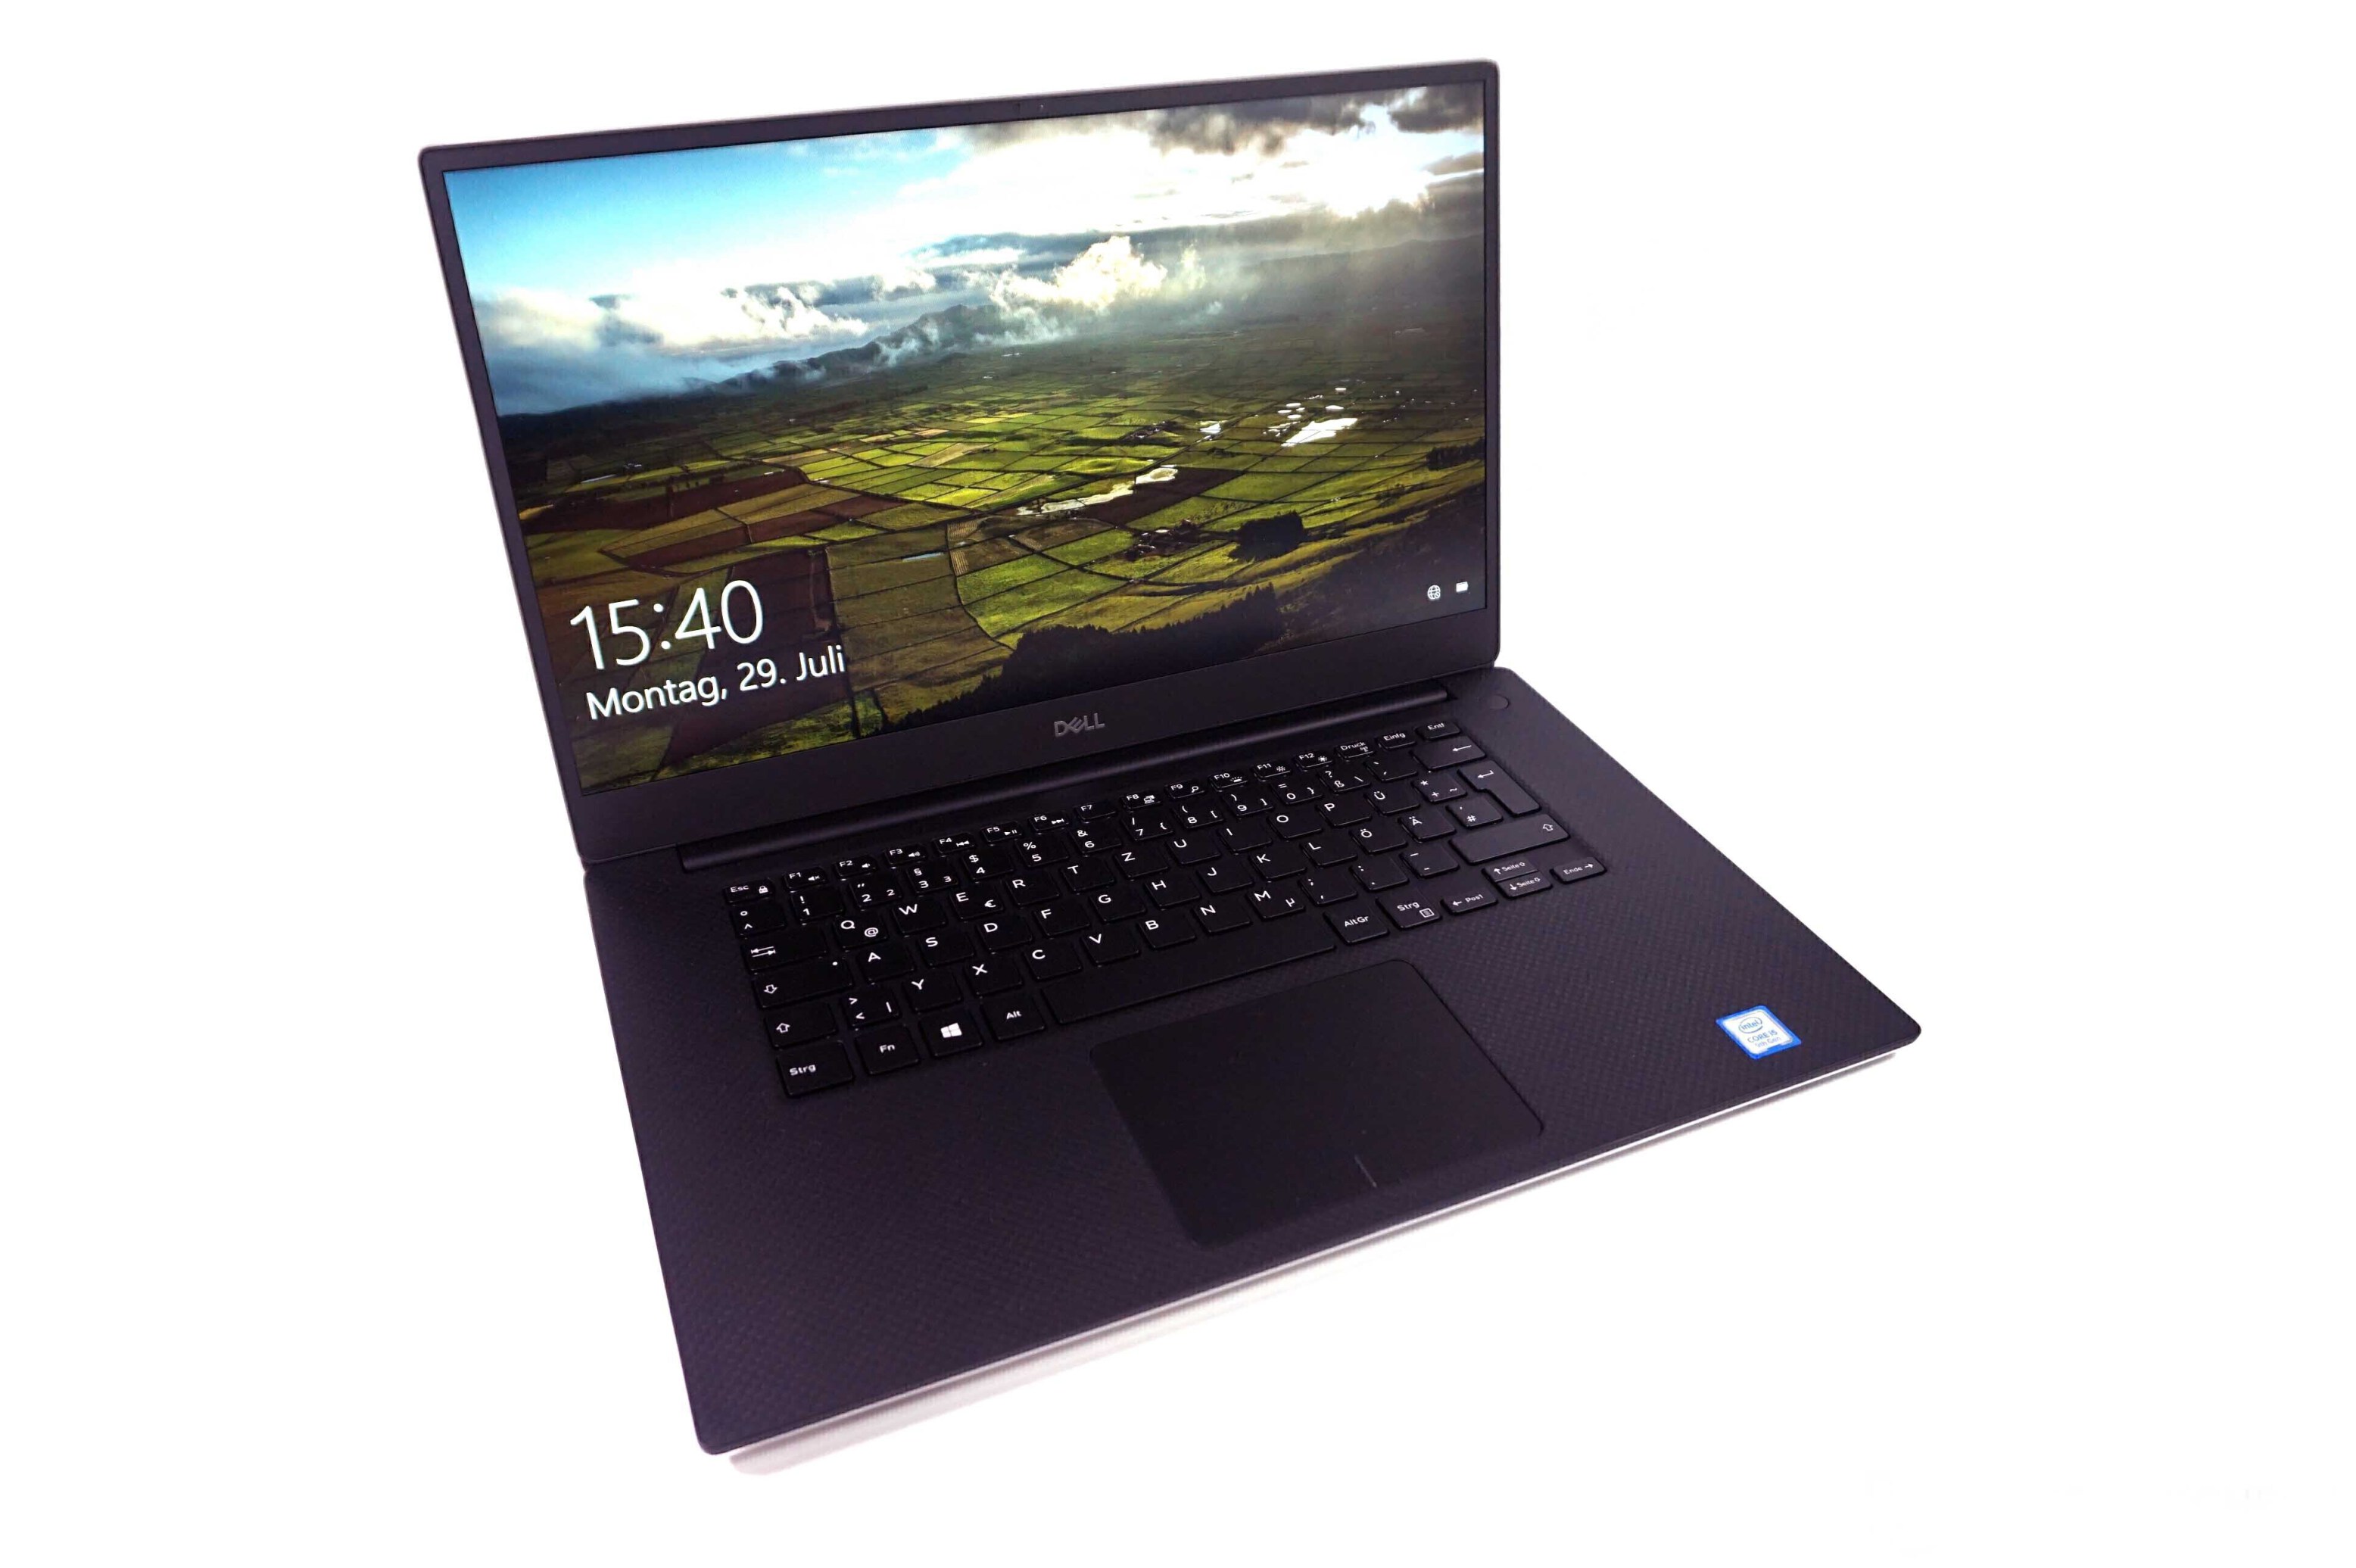  لپ تاپ Dell Xps 15 7590 با گرافیک 4 گیگابایت GTX 1650 | لپ تاپ Dell Xps 15 7590 FHD | لاکچری لپ تاپ 